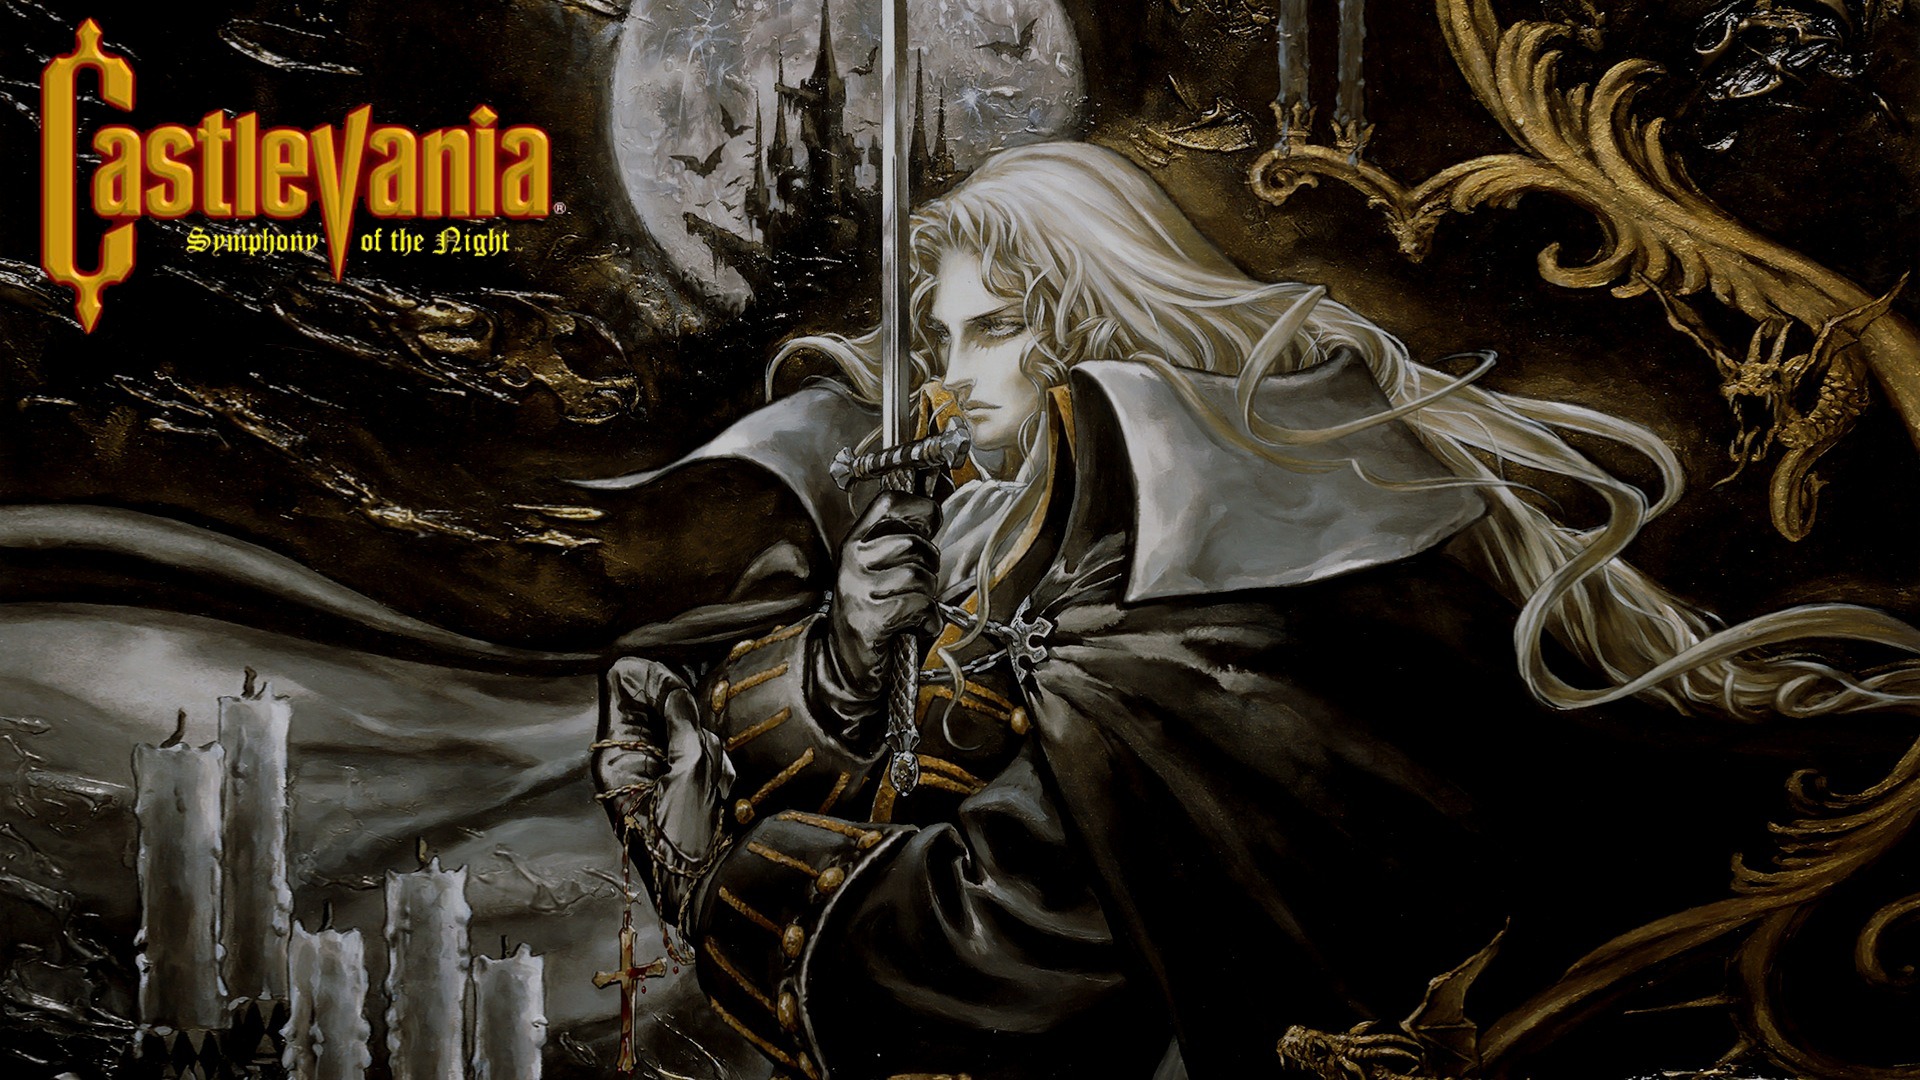 Castlevania Symphony of the Night: Celebrating 21 Years of Fright.